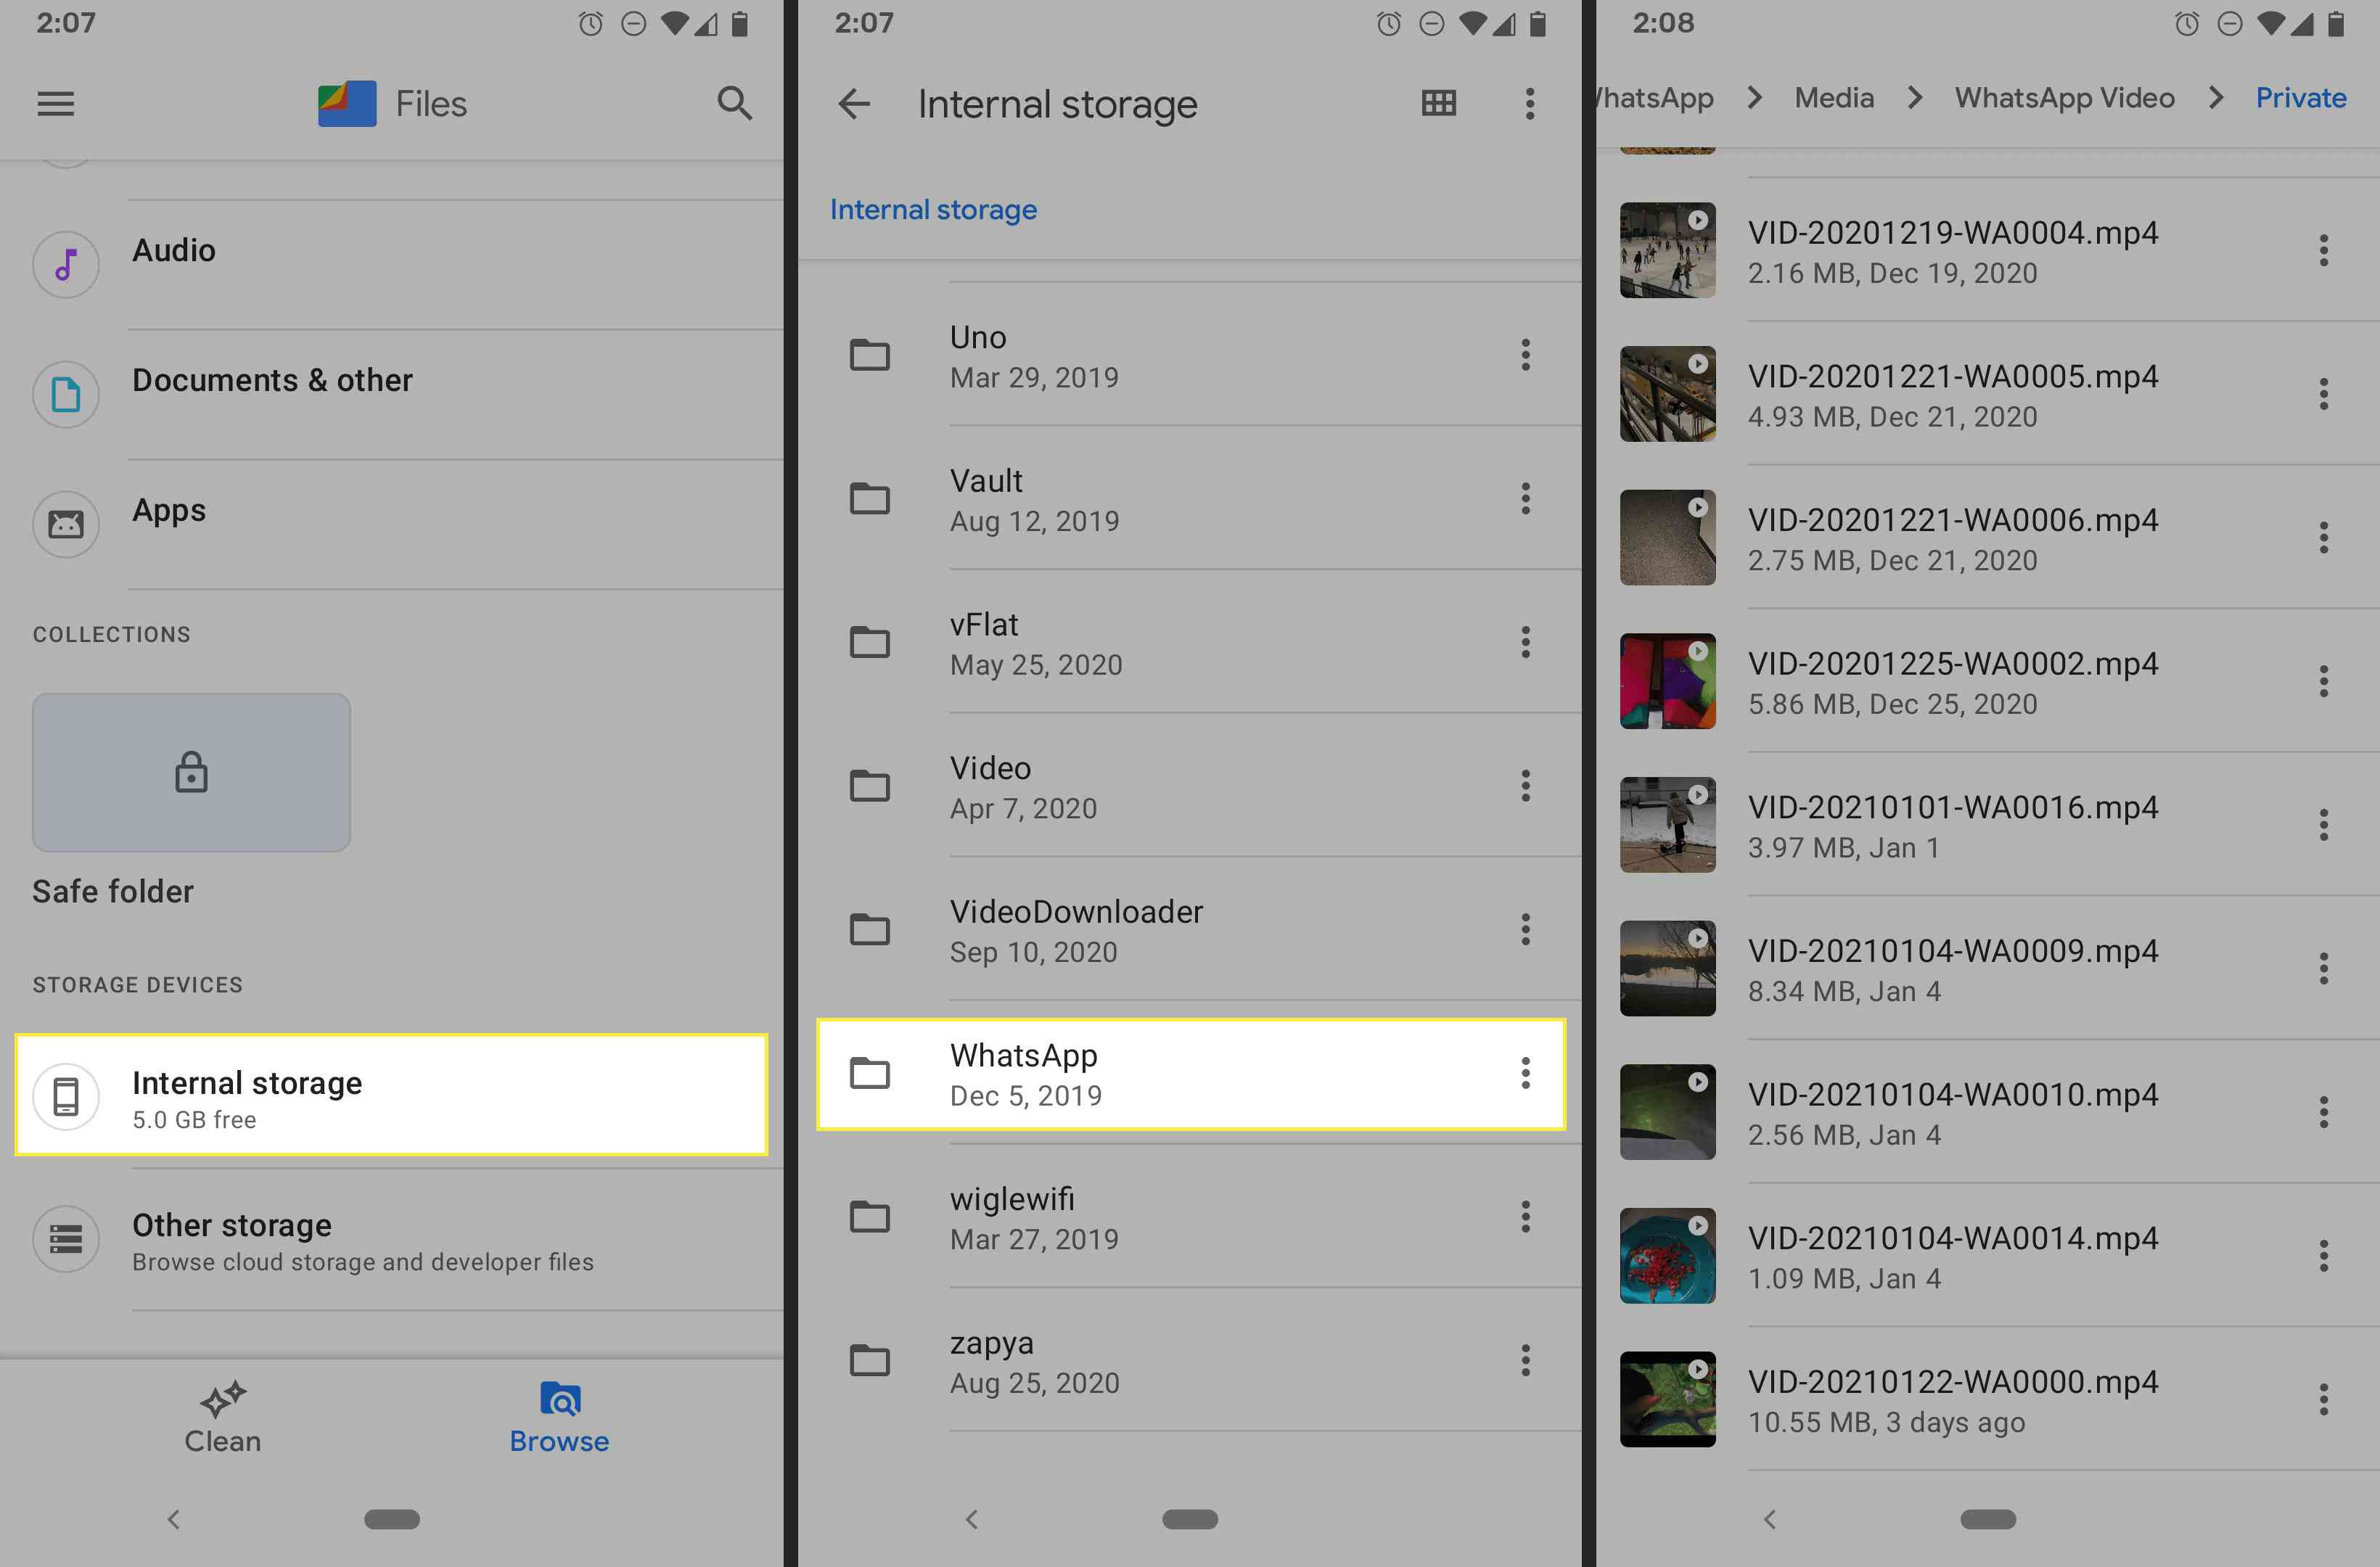 Aplicativo Google Files para Android mostrando downloads de vídeos do WhatsApp.